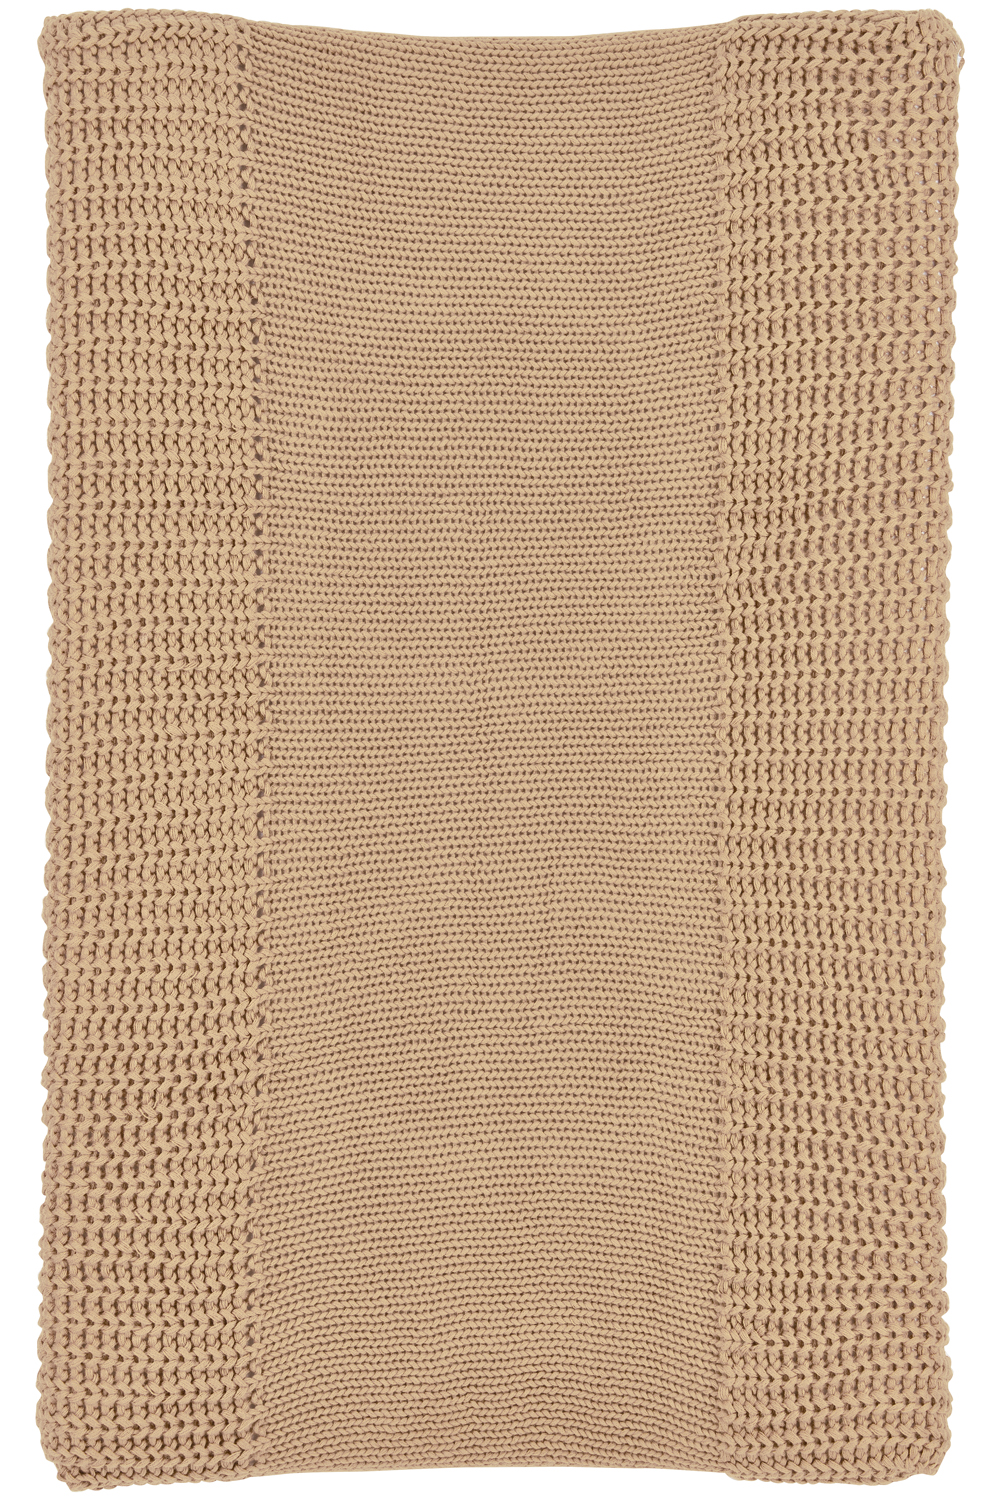 Aankleedkussenhoes Herringbone - Warm Sand - 50x70cm